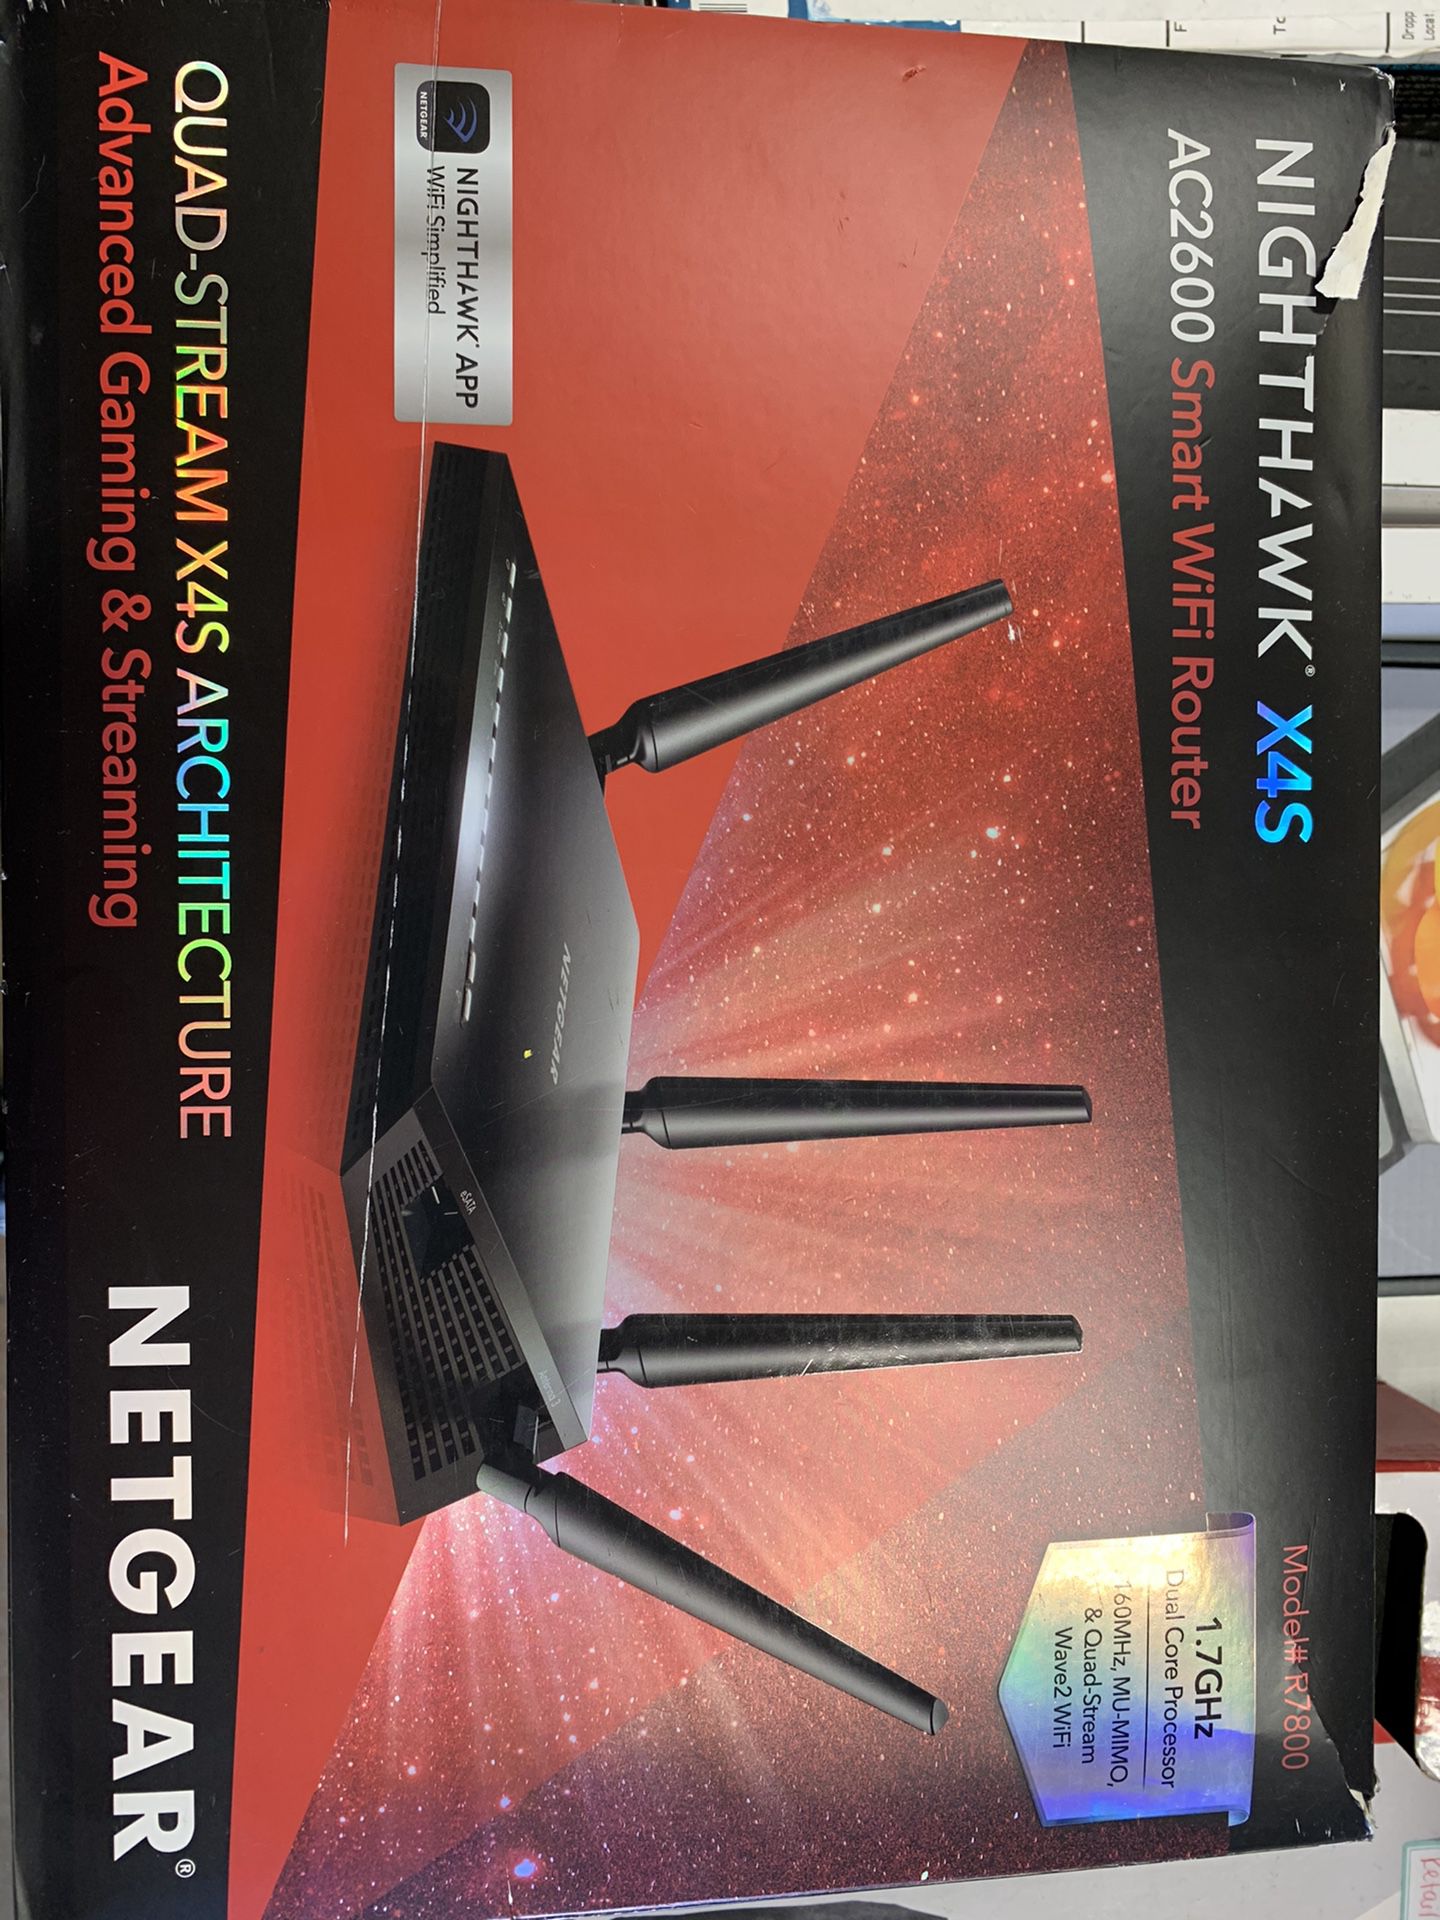 WiFi smart Router Netgear 4XS, 1.7 GH New in Box cost $259